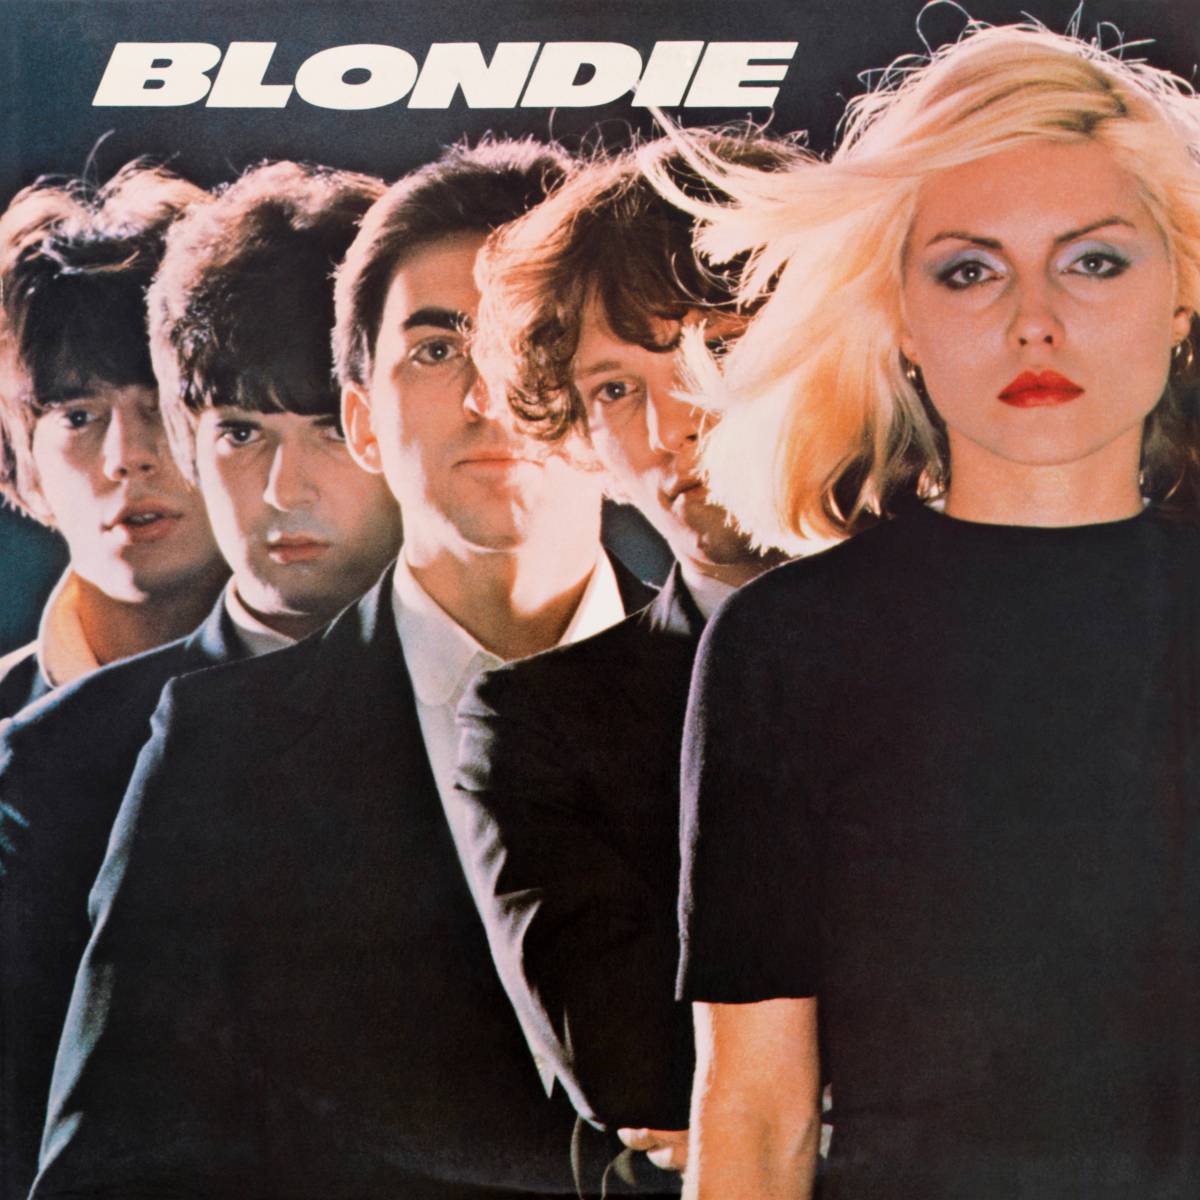 Blondie portada de disco de rock